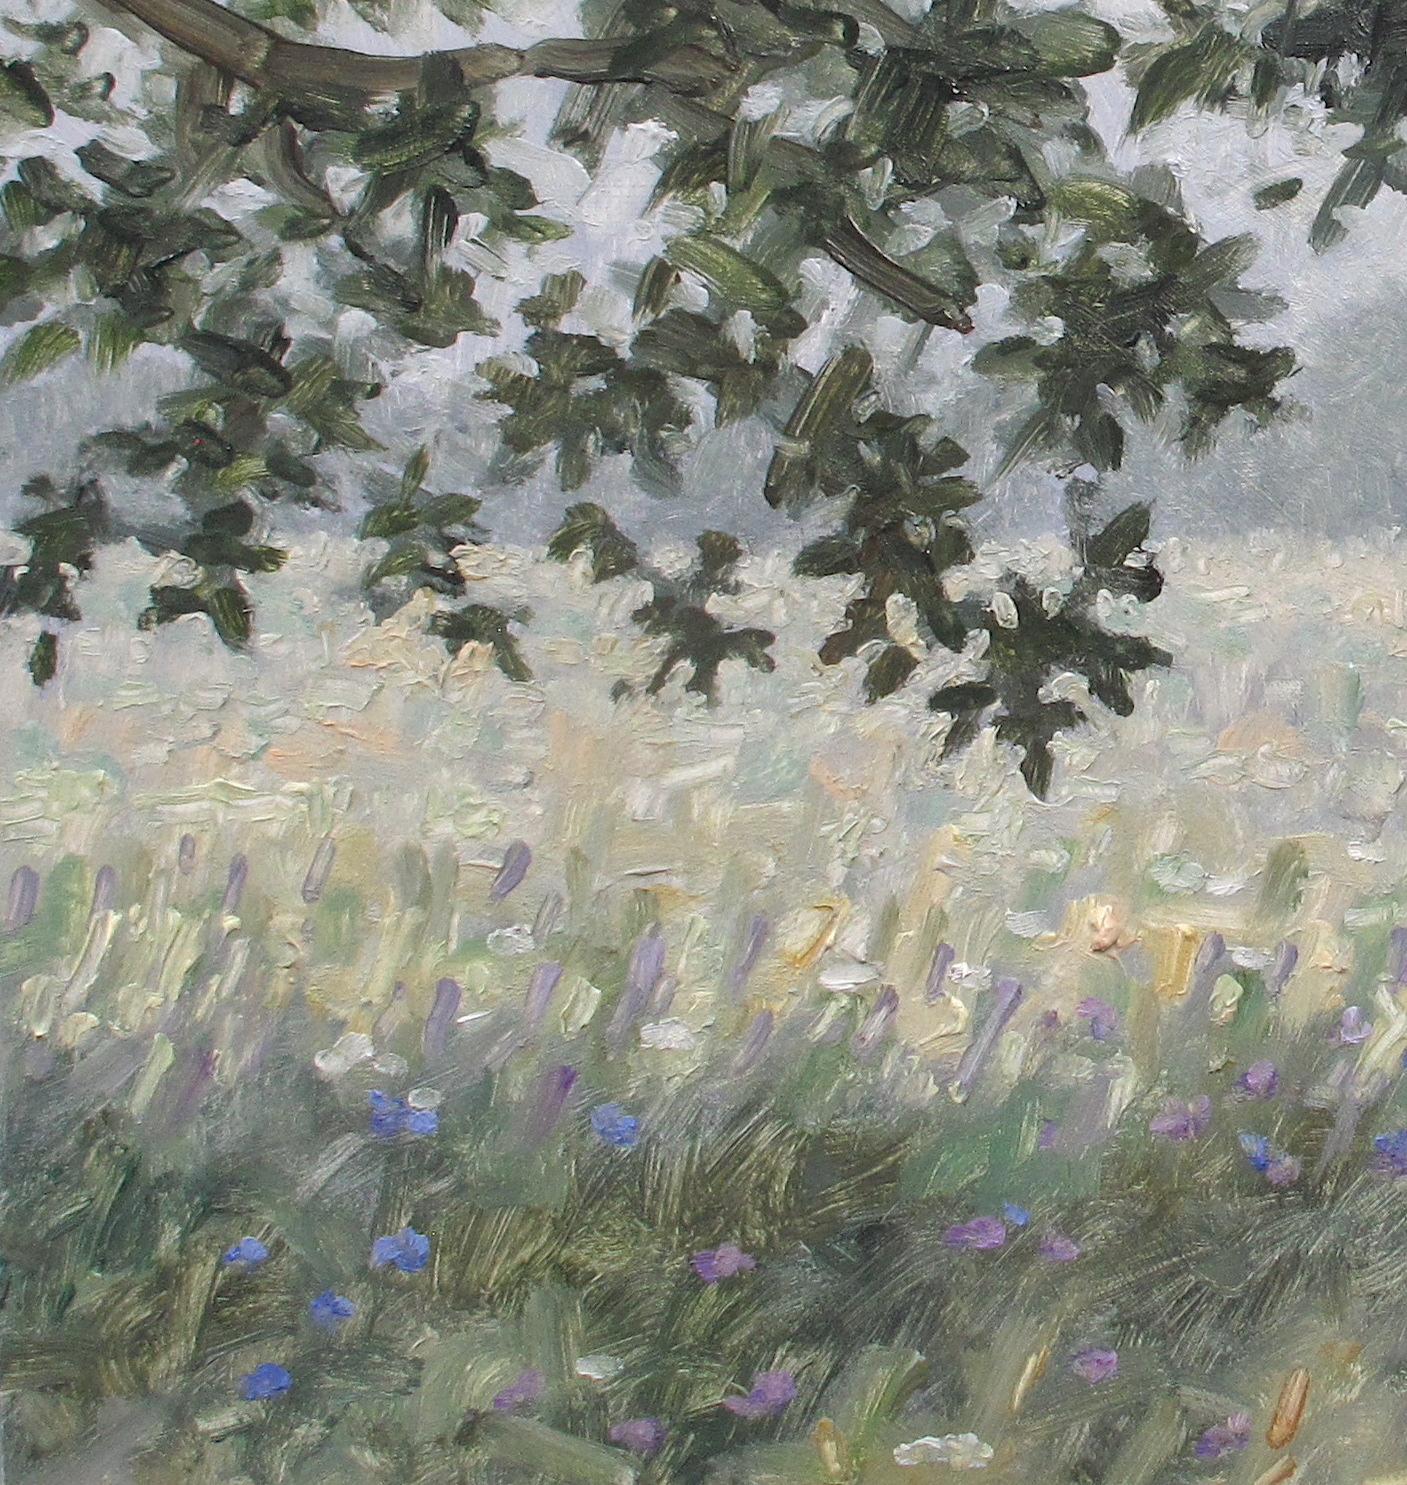 Field Painting August 17 2020, Landscape, Flowers in Green Field, Trees, Flowers - Gray Landscape Painting by Thomas Sarrantonio